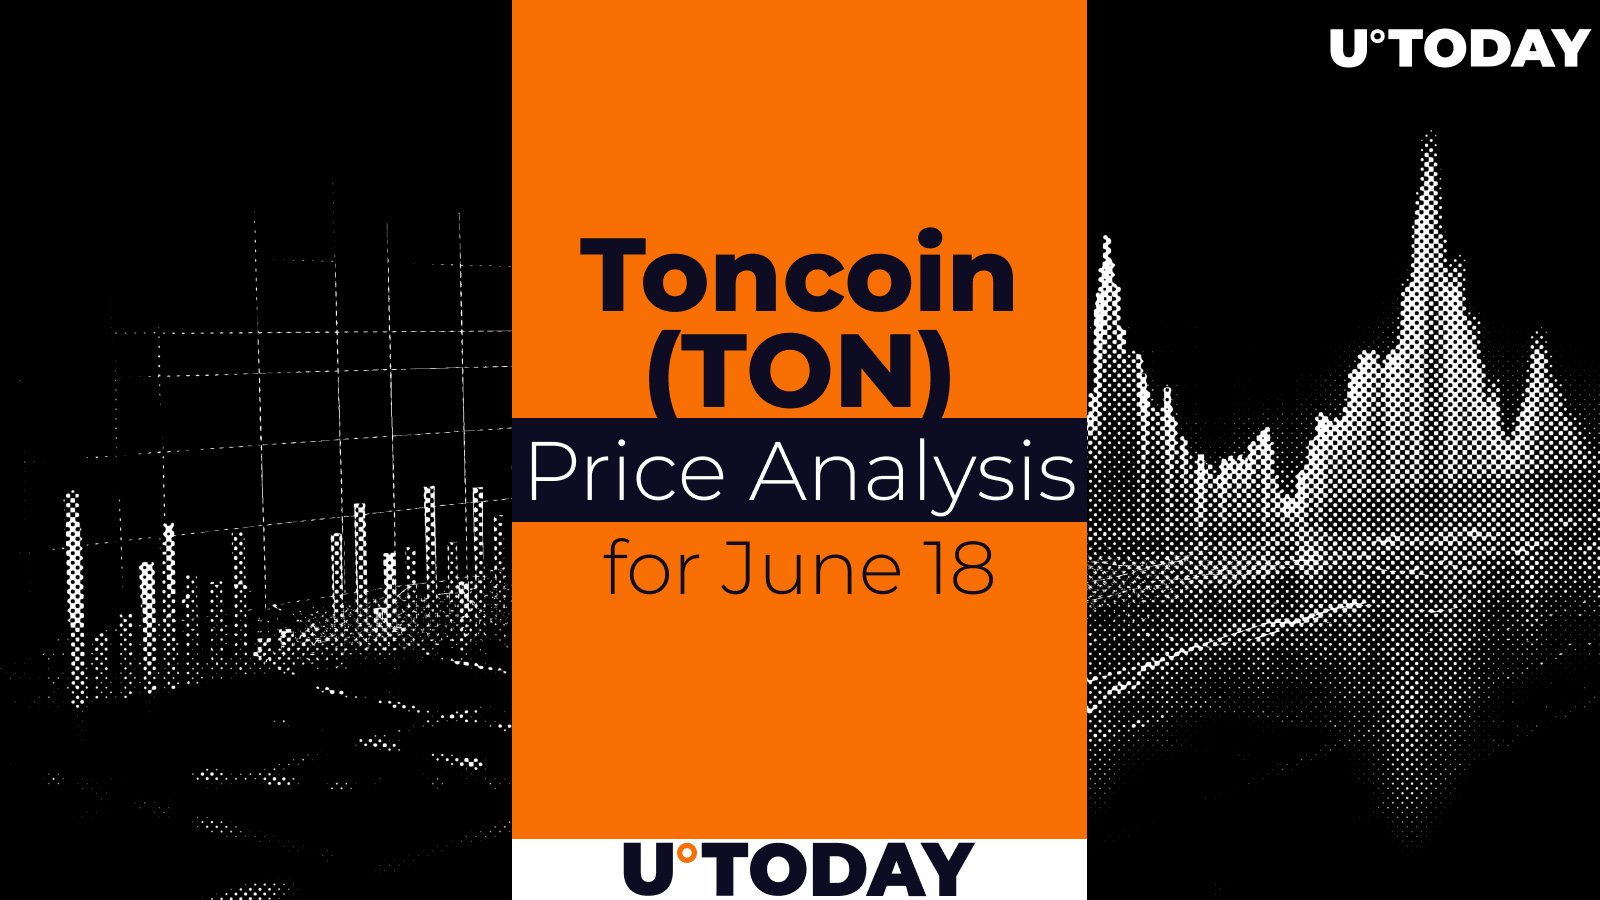 Toncoin (TON) Price Prediction for June 18